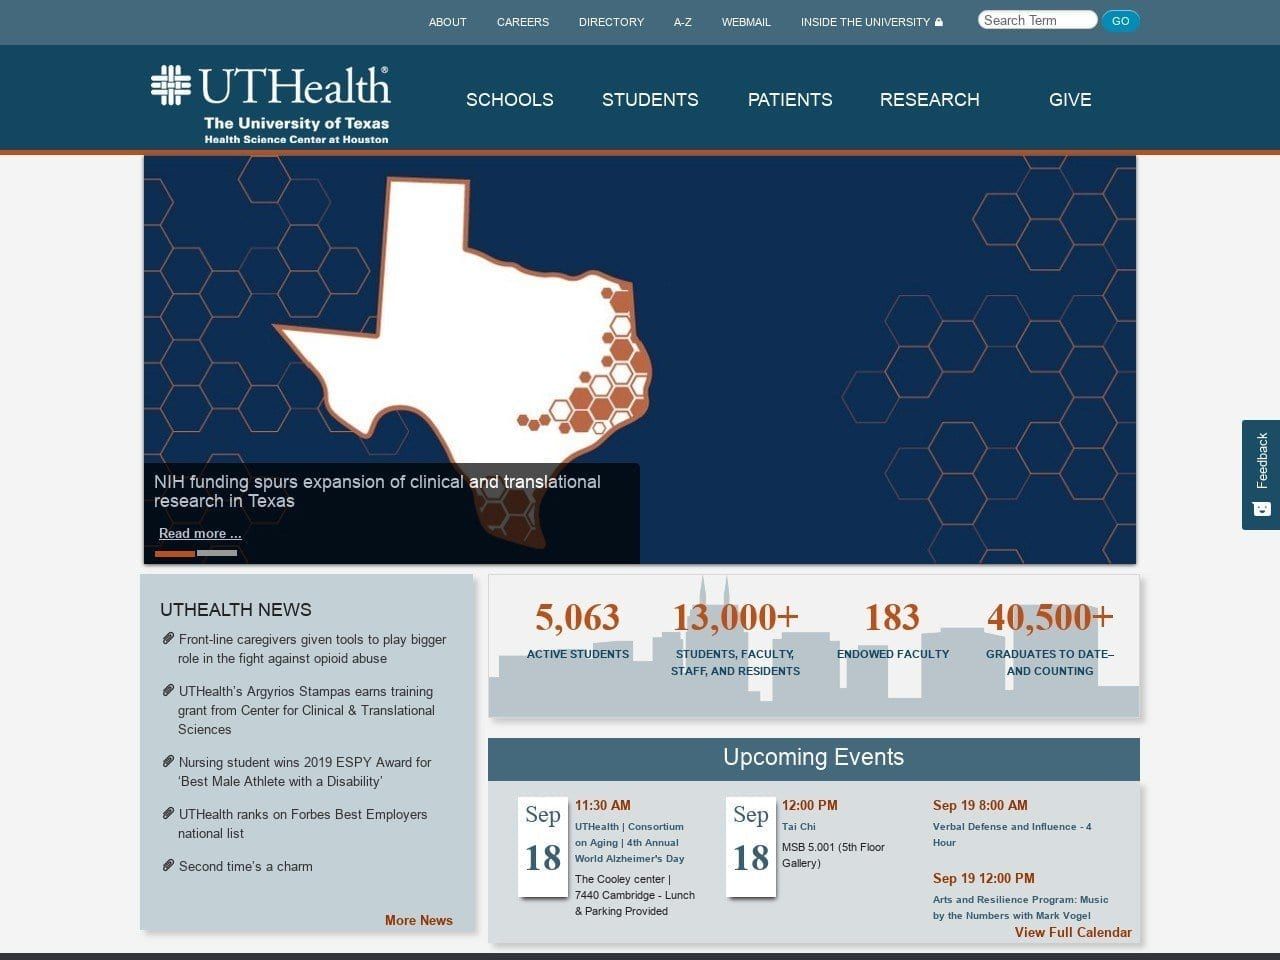 Dr. Arthur H. Jeske DMD Website Screenshot from uth.tmc.edu